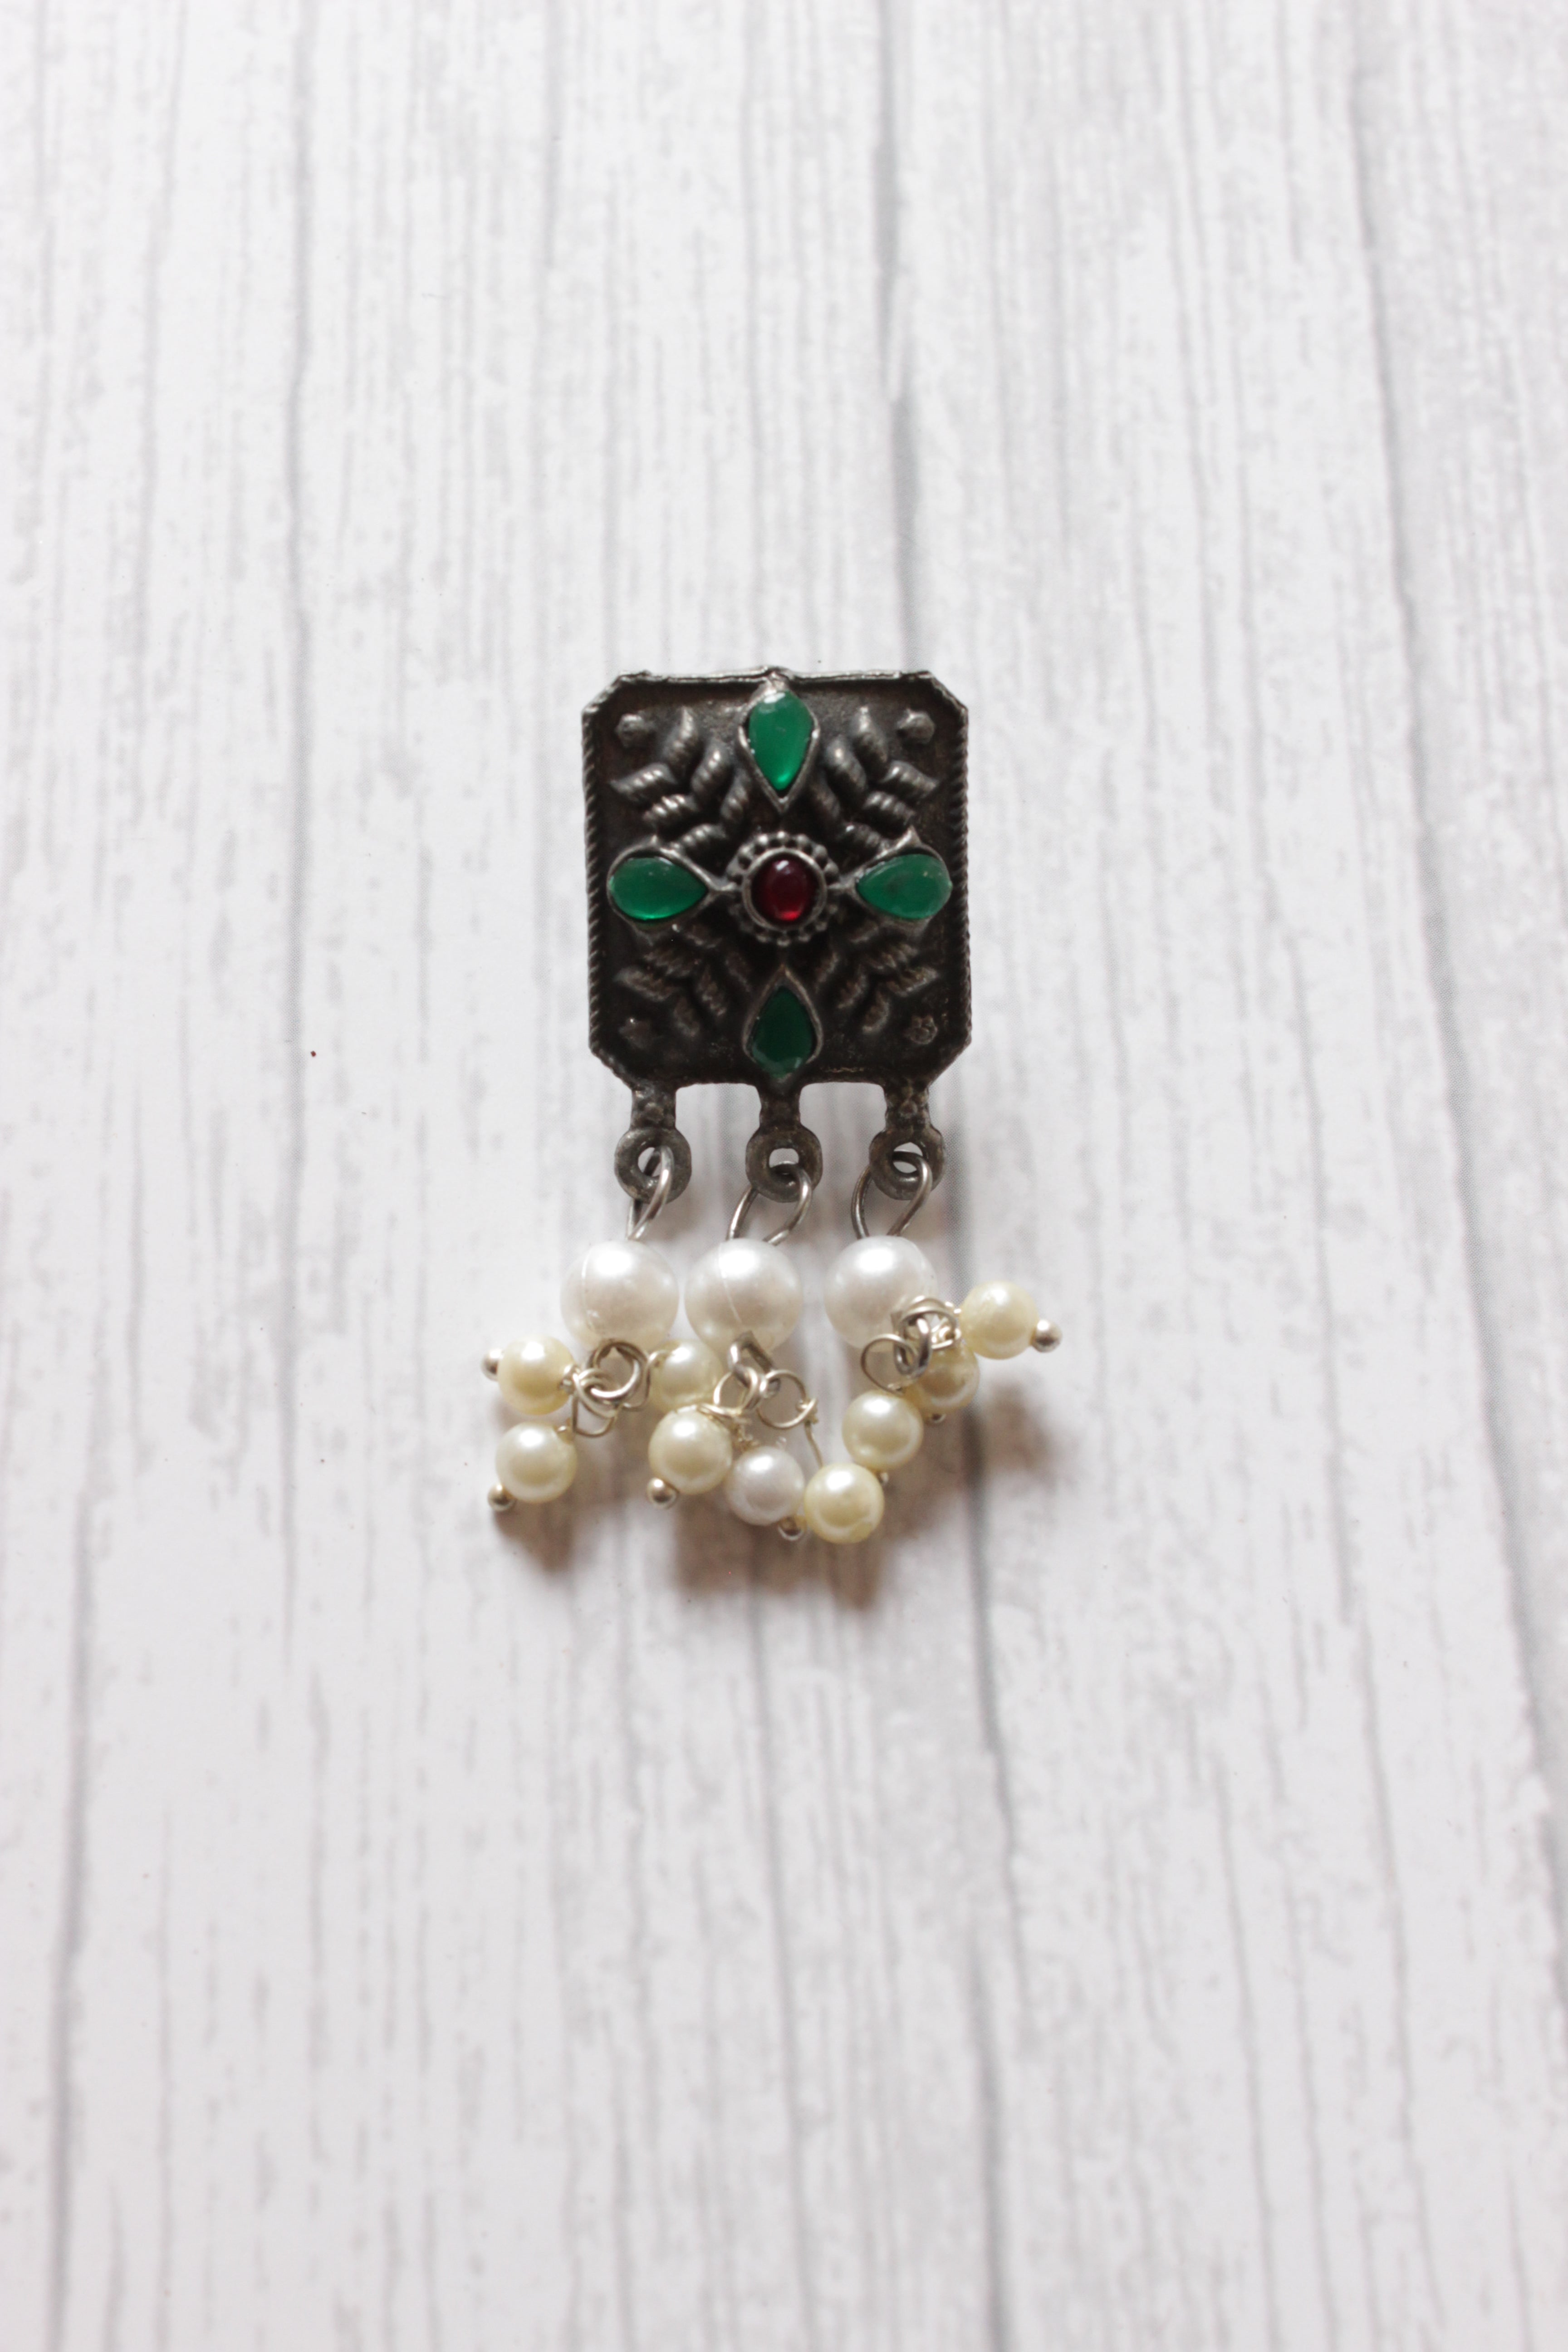 Adjustable Mini Choker Necklace Set with Rhinestones and White Beads Detailing